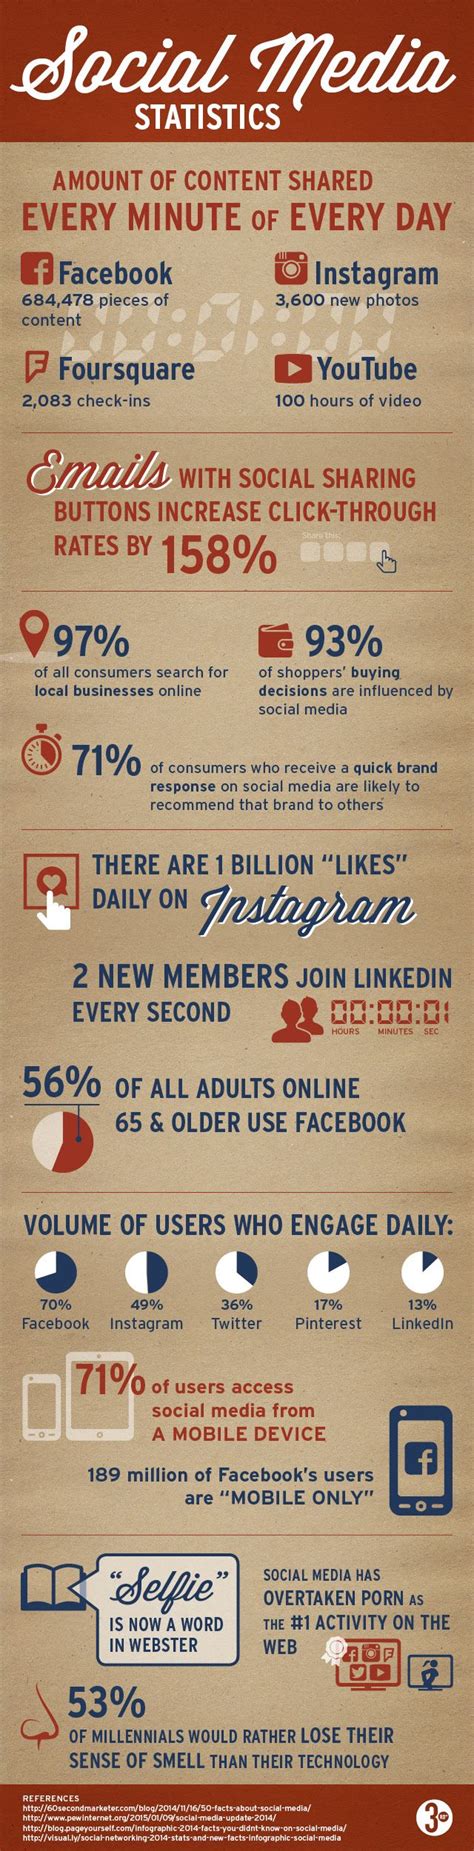 social media statistics infographic  content revolution